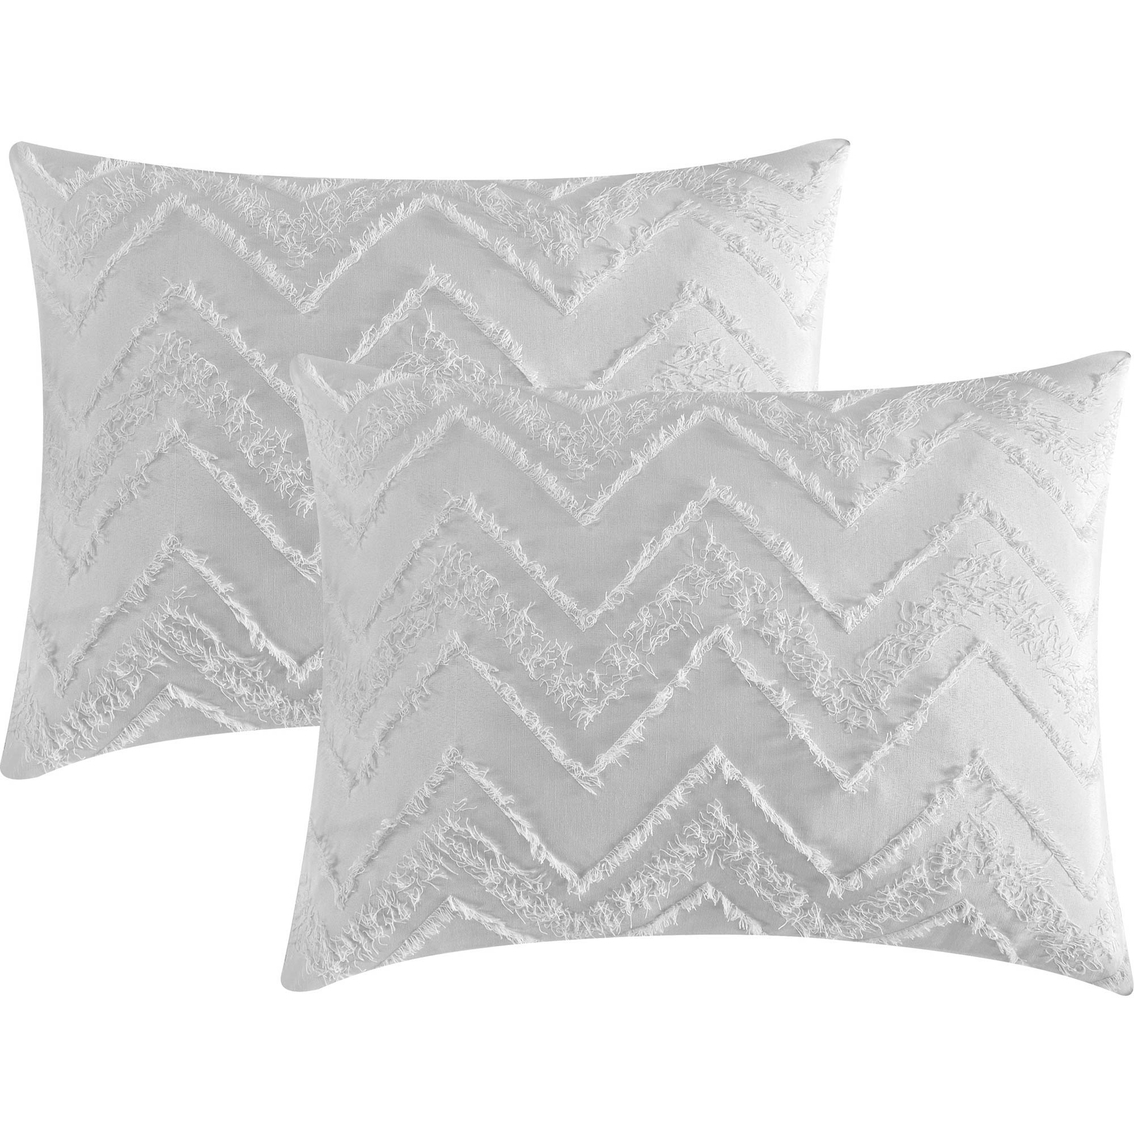 Grand Avenue Farisa 7 Pc. Comforter Set | Bedding Sets | Household ...